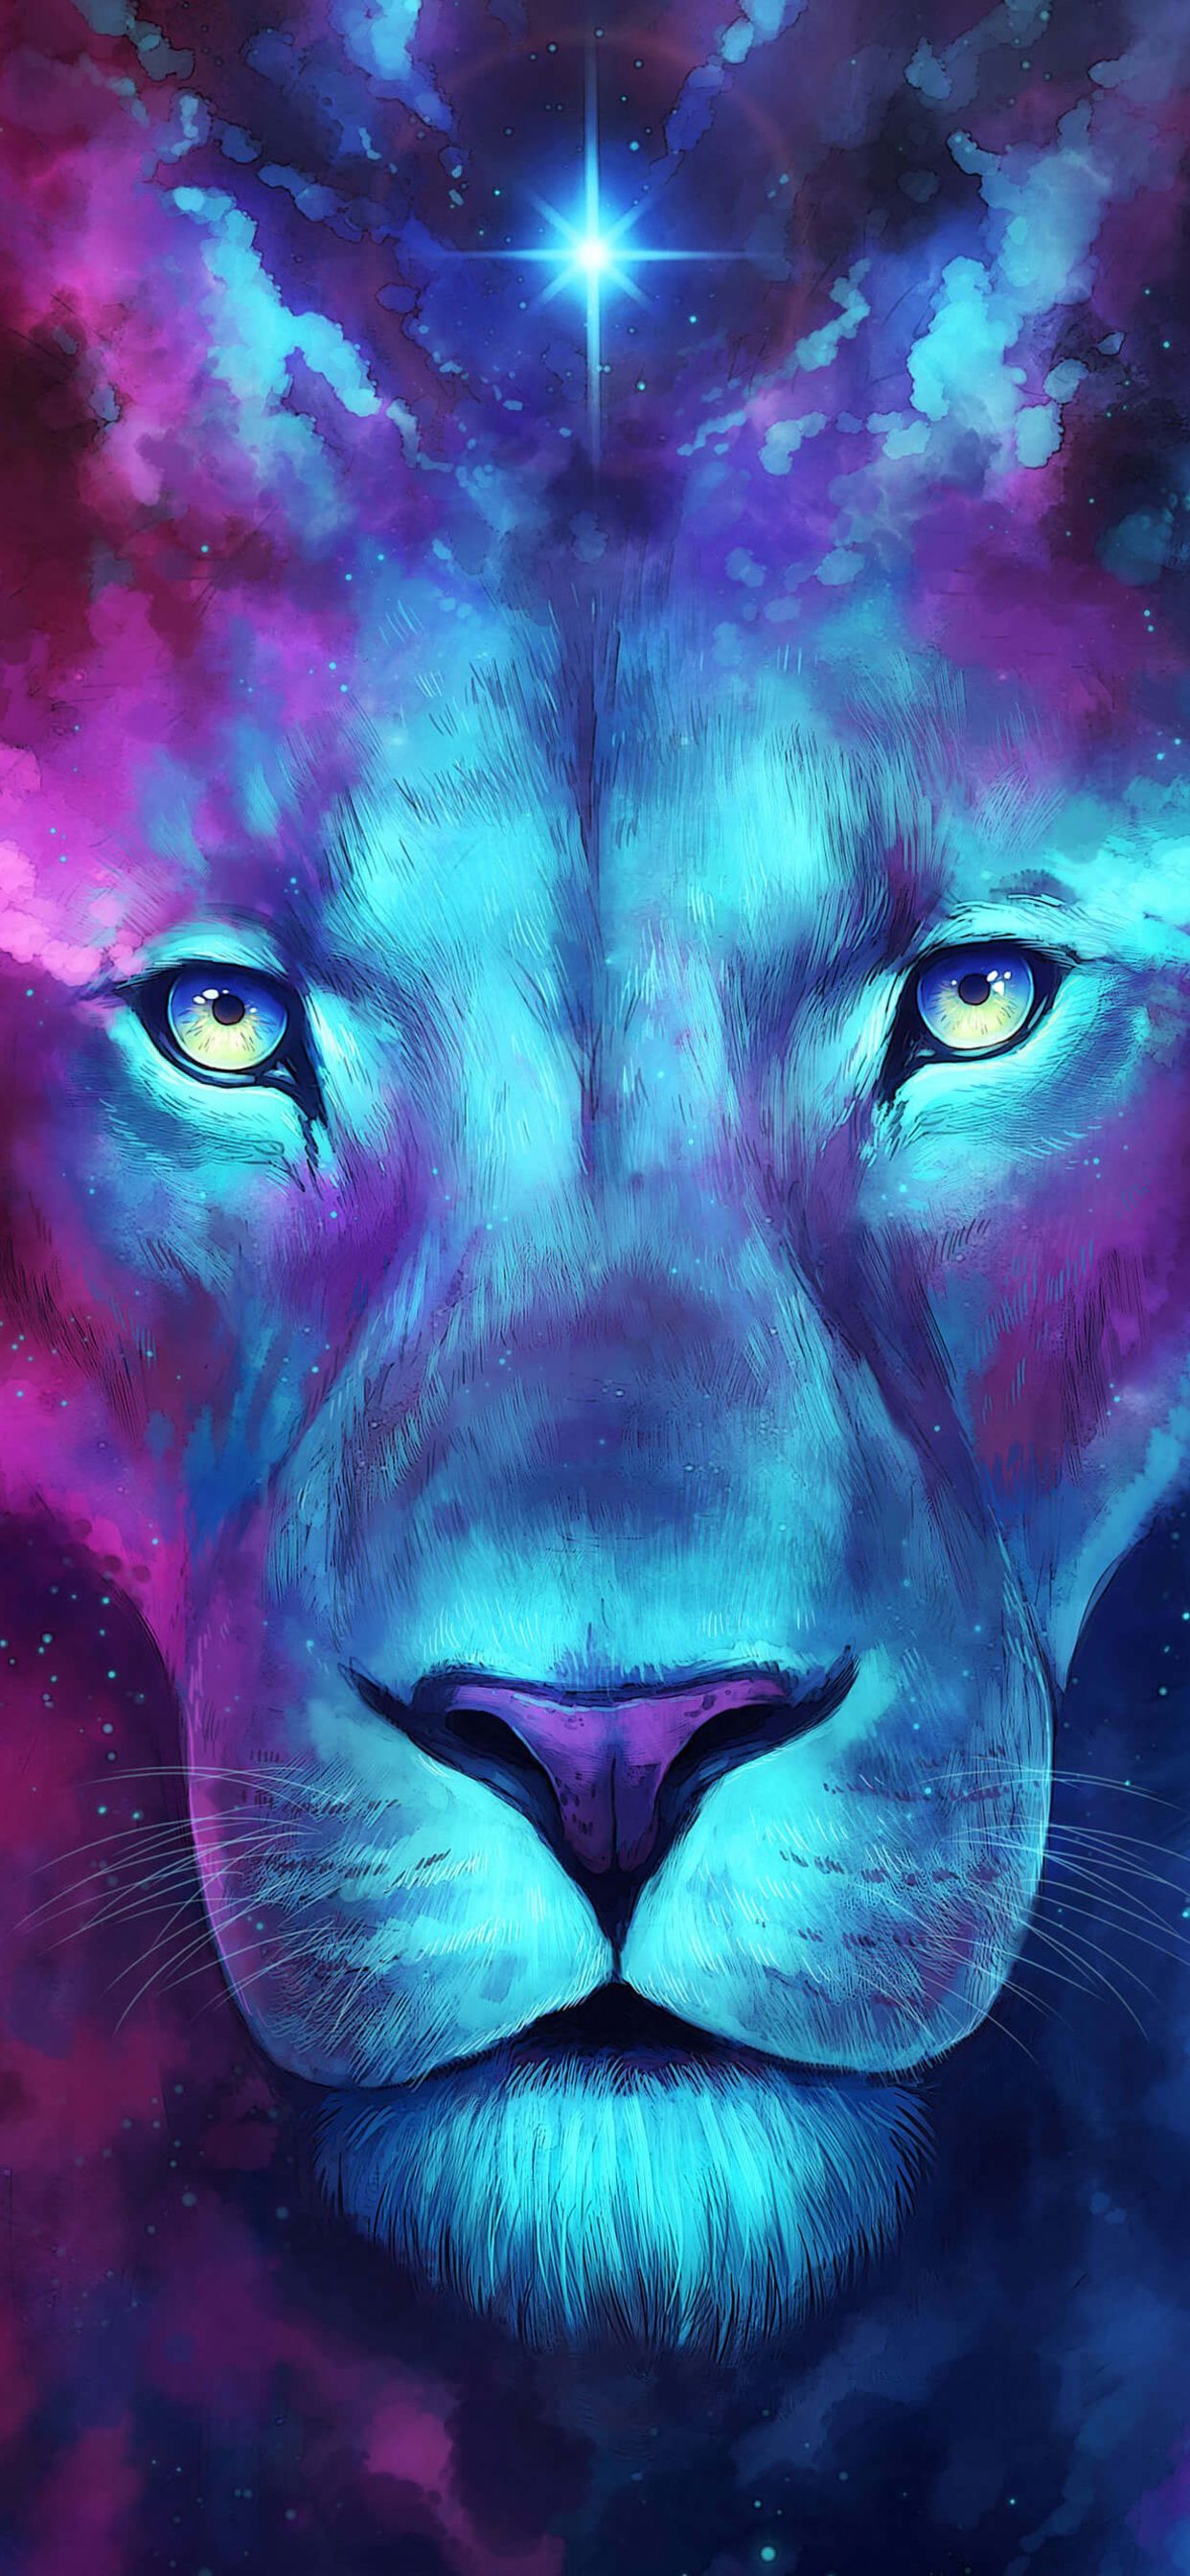 Tiger Colorful Art Wallpaper